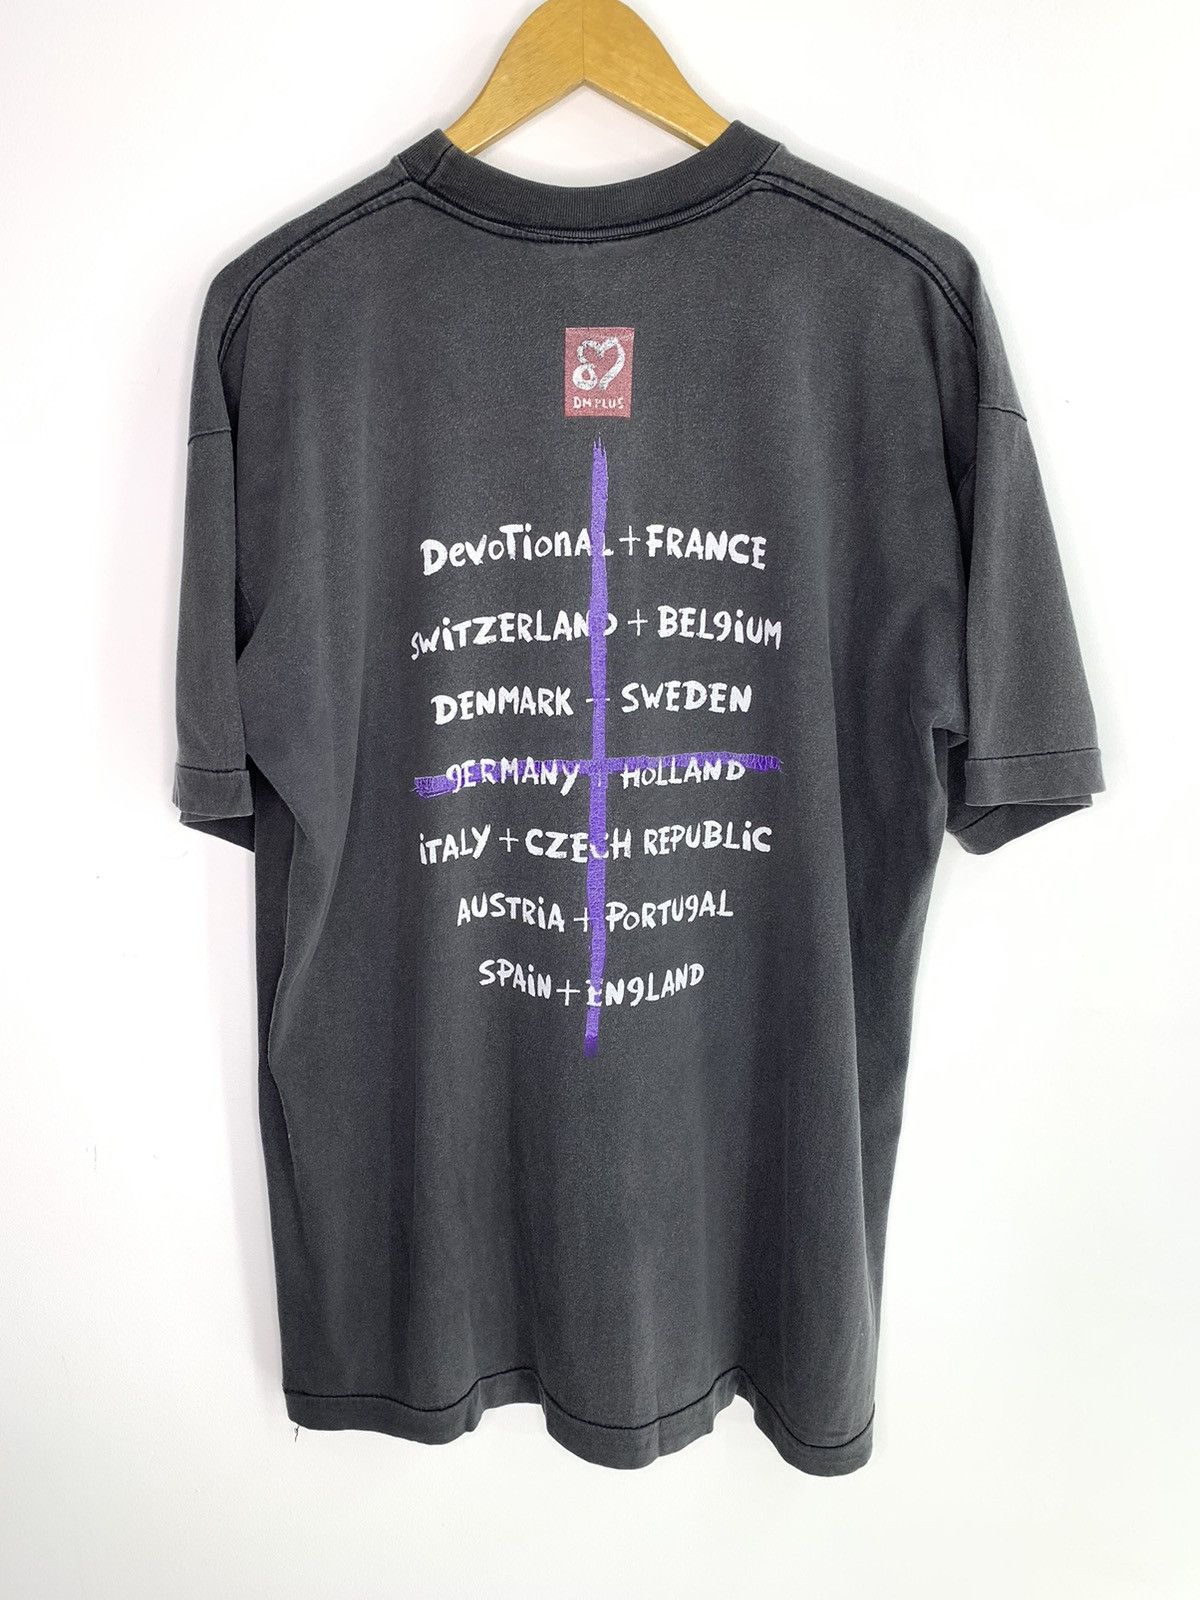 Vintage Depeche Mode Devotional Tour 1993 T-Shirt XL Size Size US XL / EU 56 / 4 - 3 Thumbnail